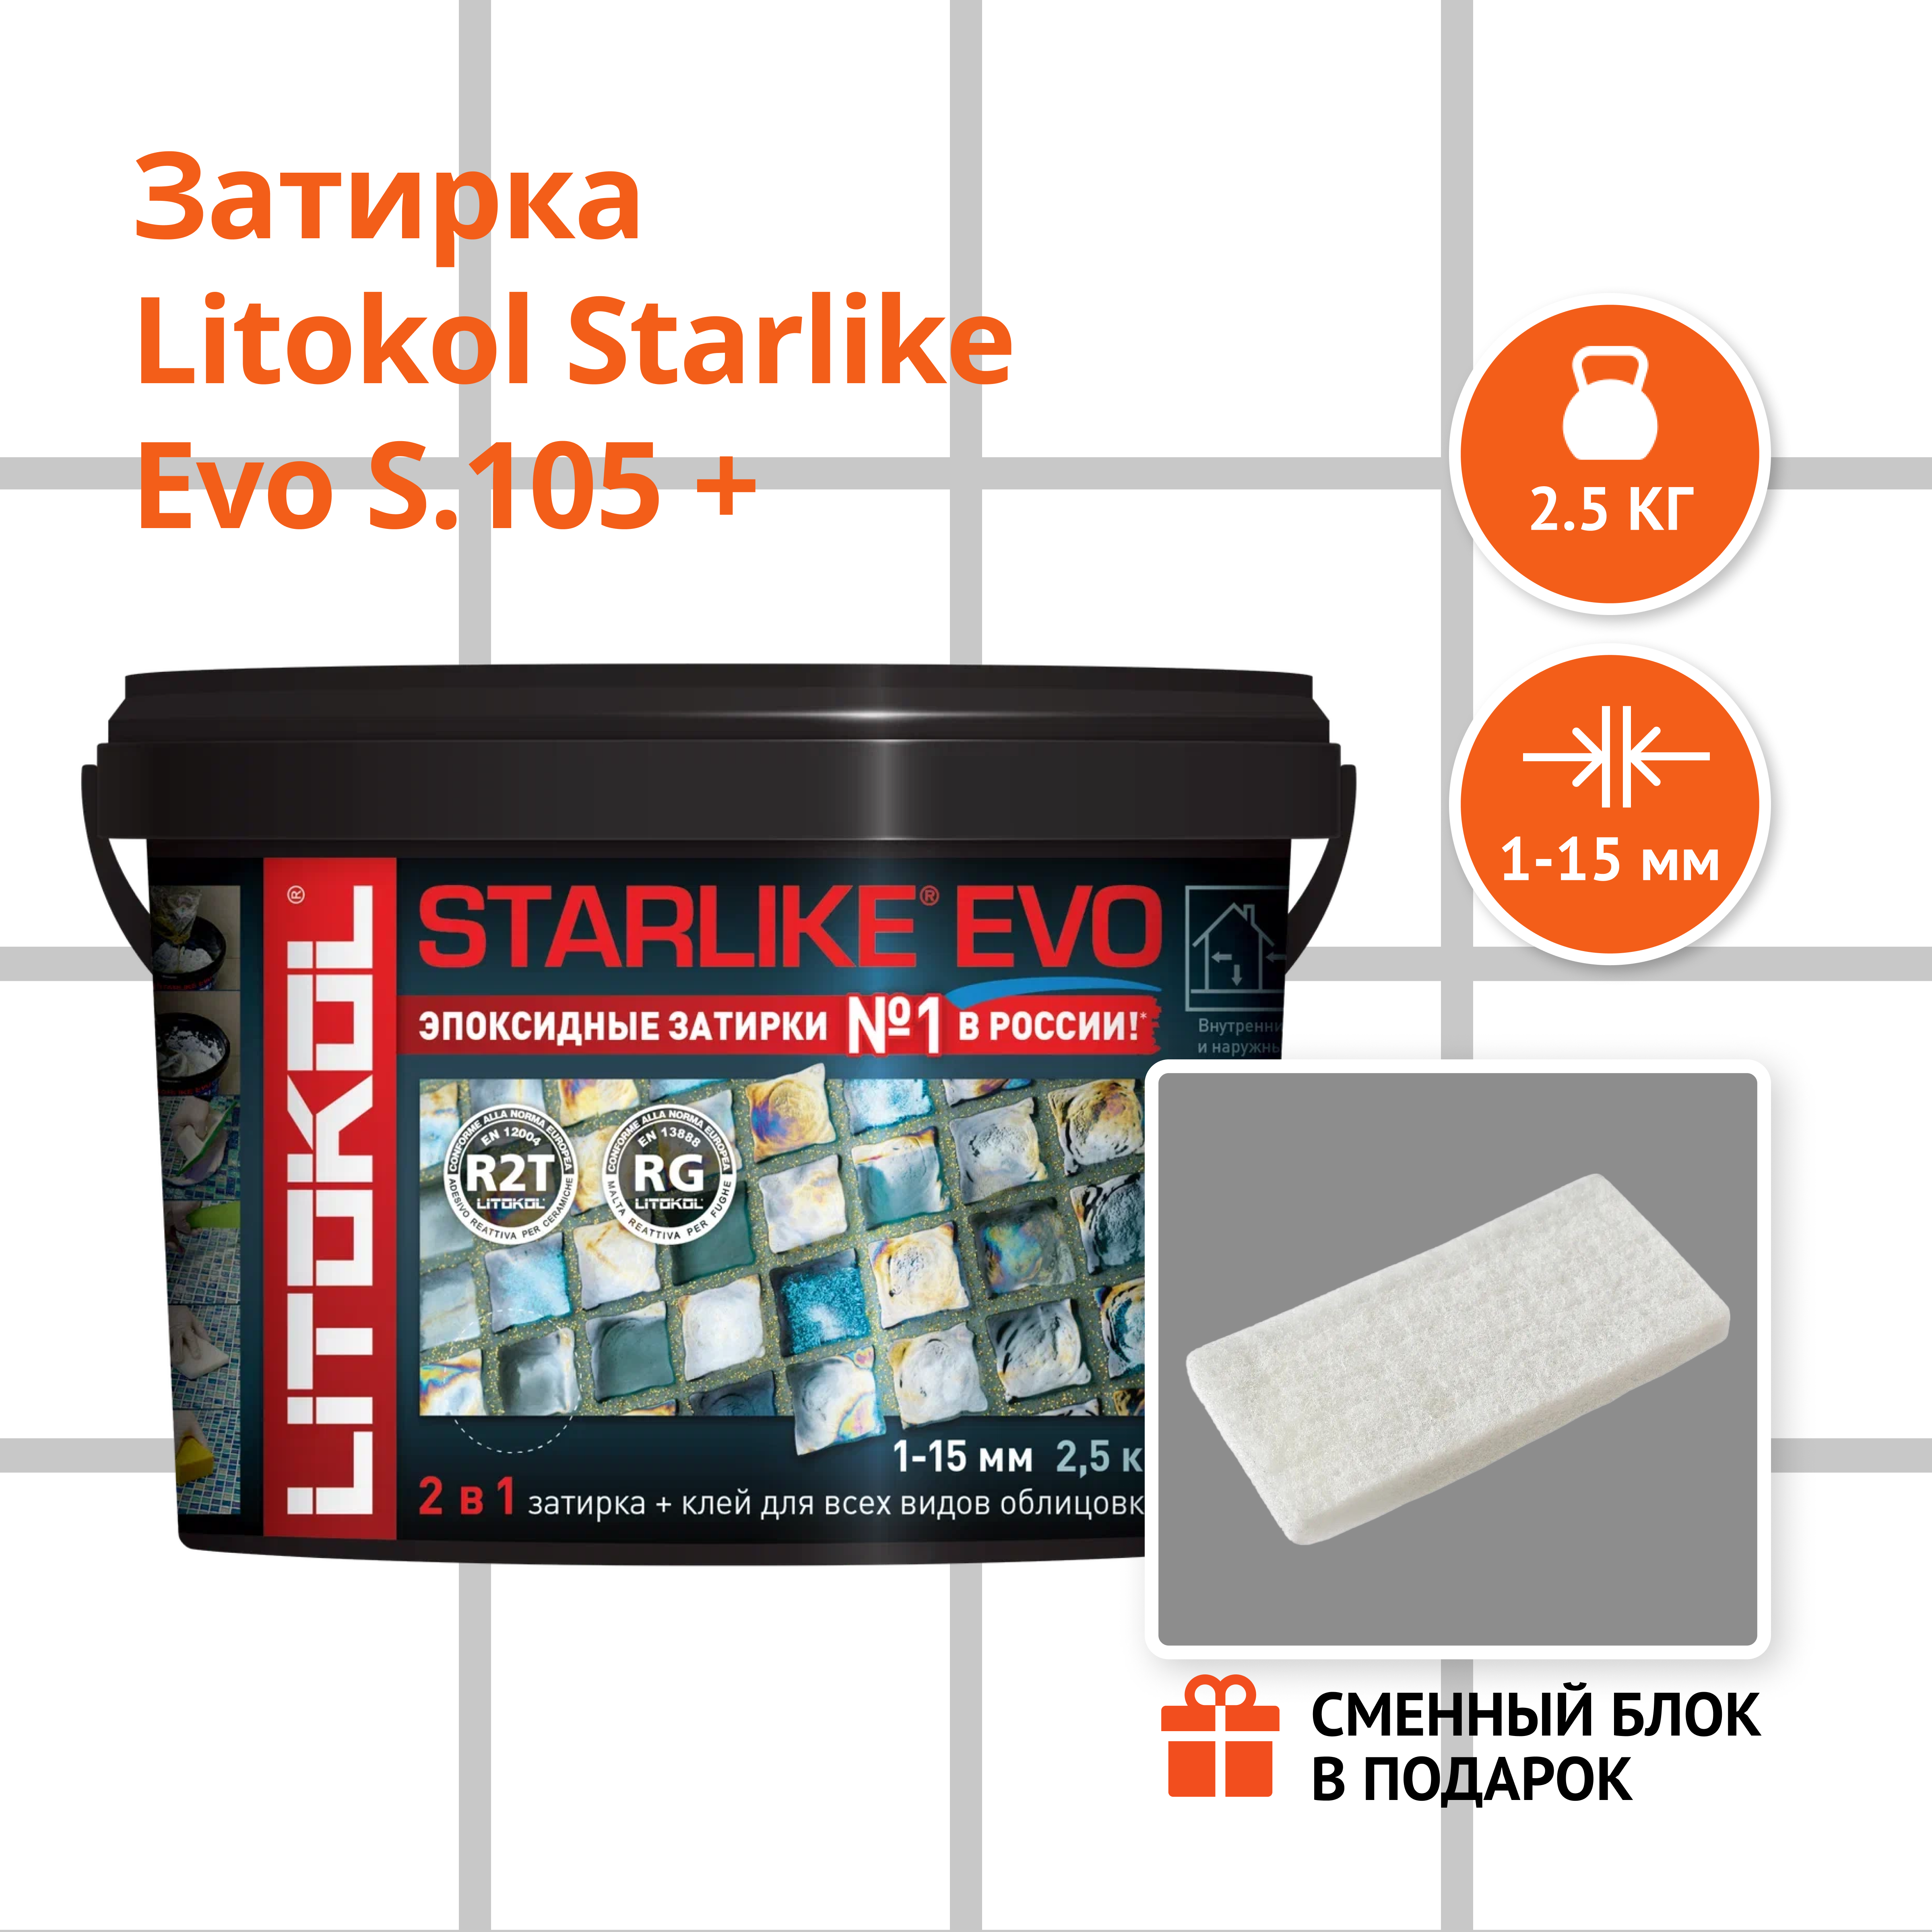 Затирка LITOKOL STARLIKE EVO S.105 BIANCO TITANIO 2.5 кг + Сменный блок в подарок